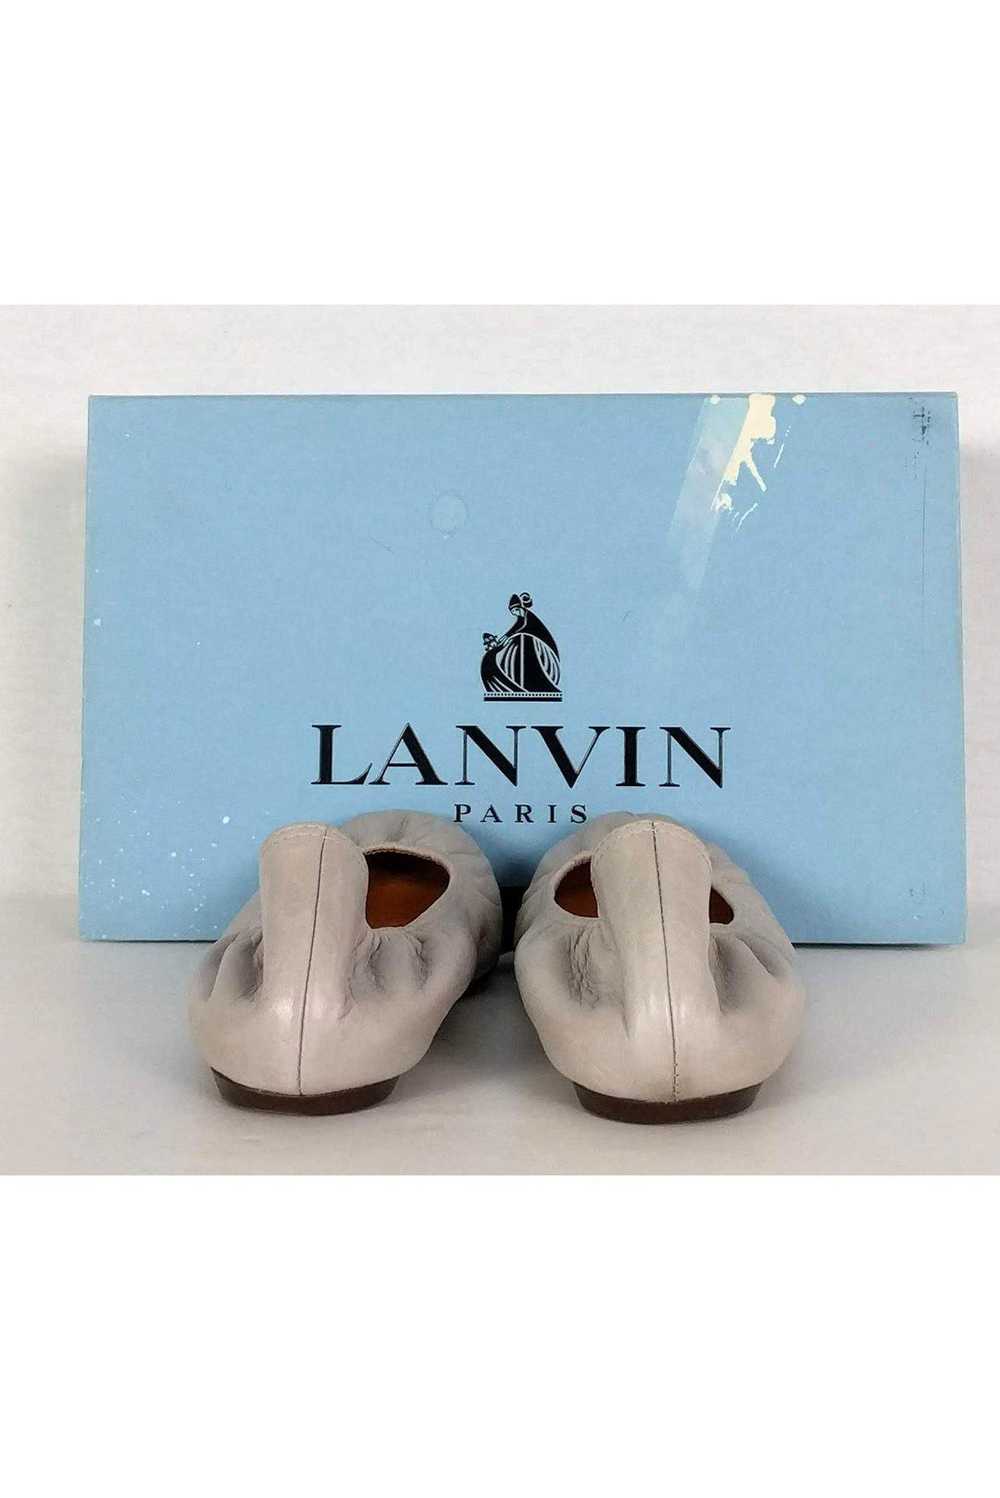 Lanvin - Light Grey Leather Ballet Flats Sz 6 - image 4